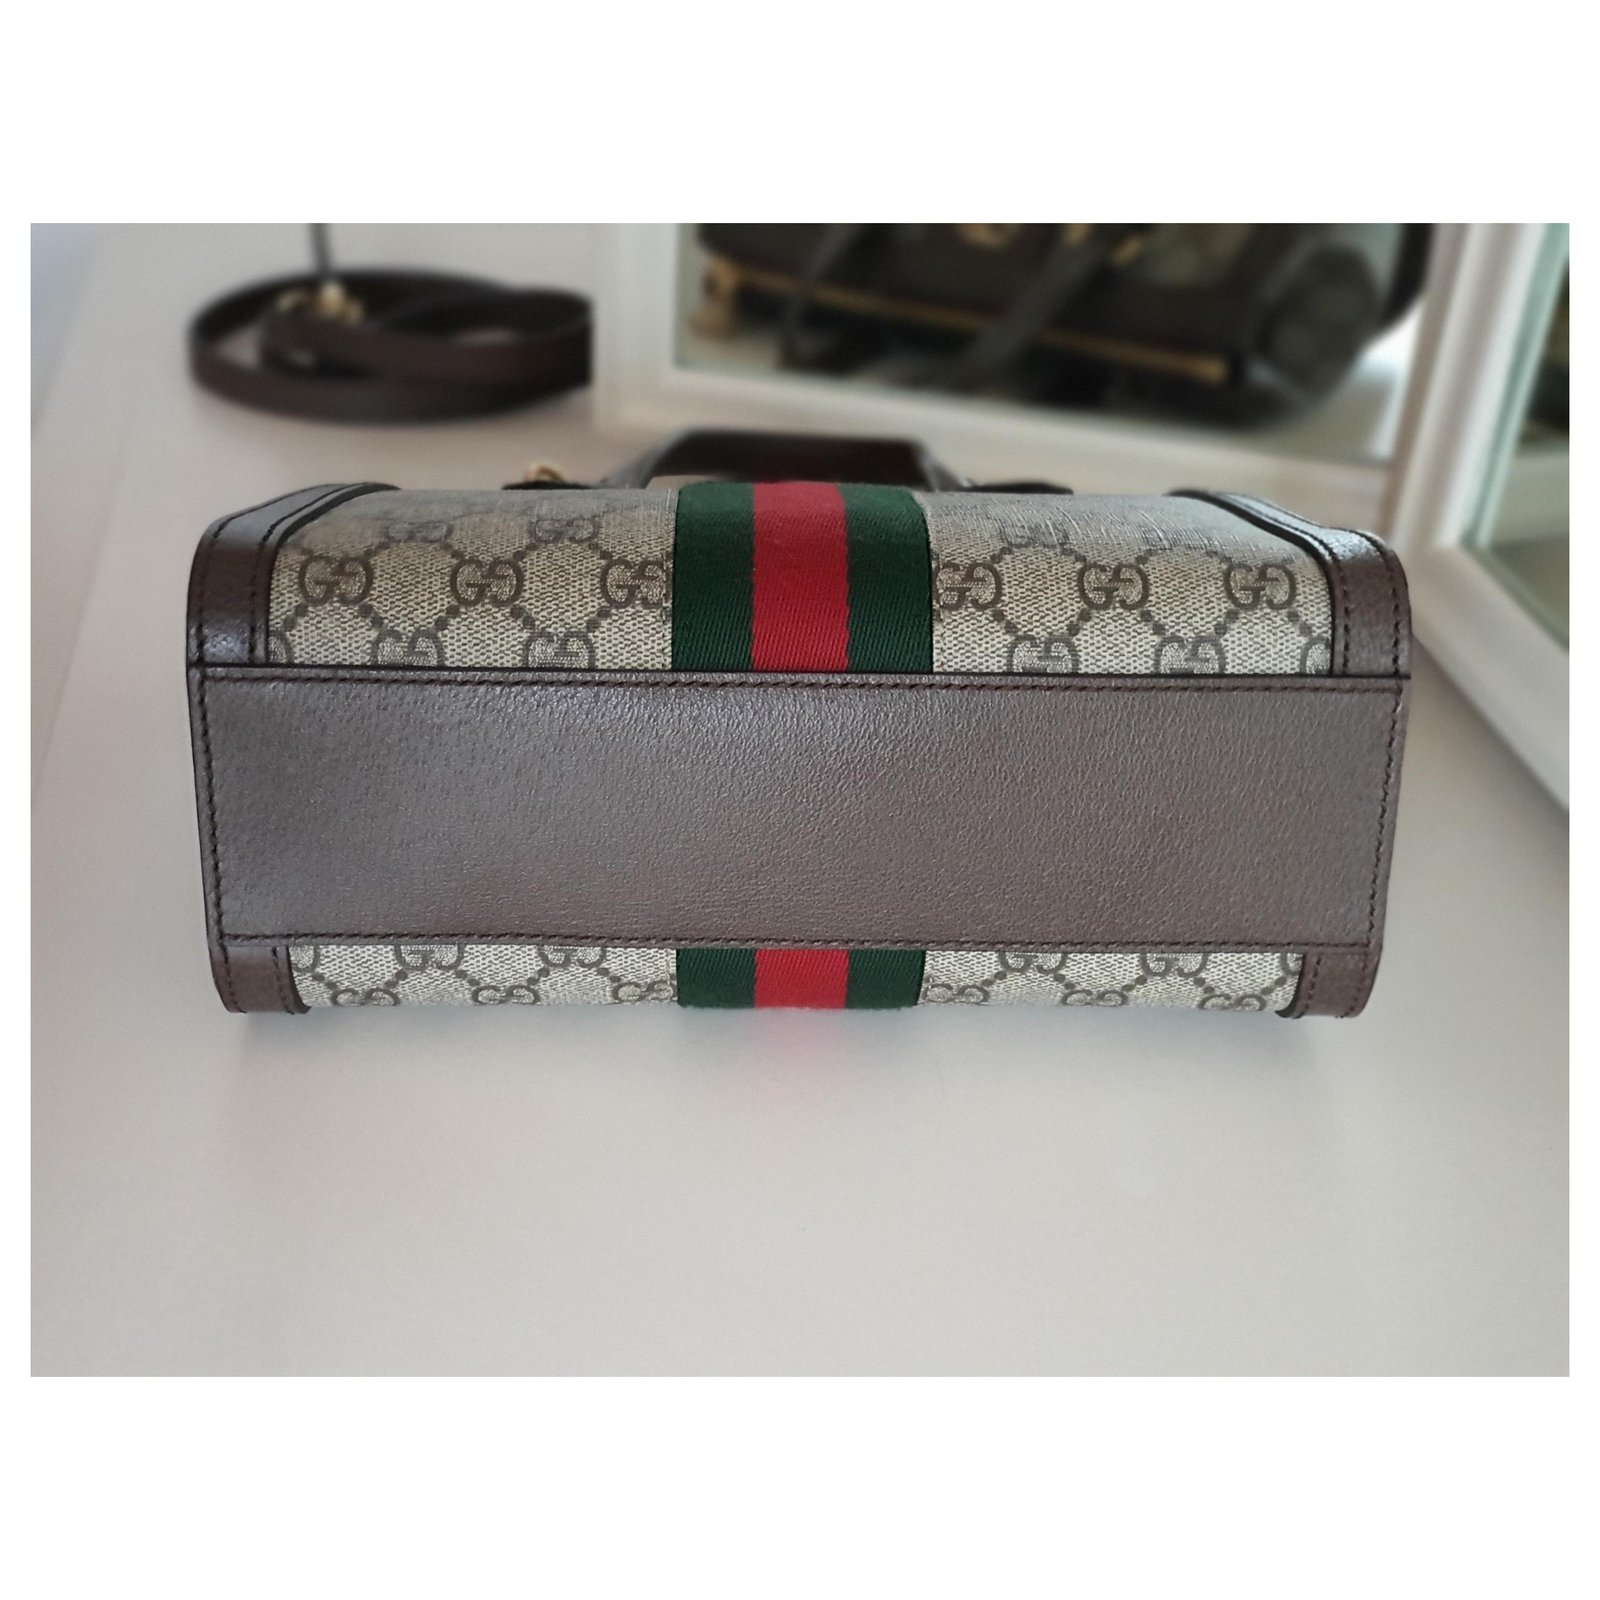 Ophidia cloth handbag Gucci Brown in Cloth - 30692735